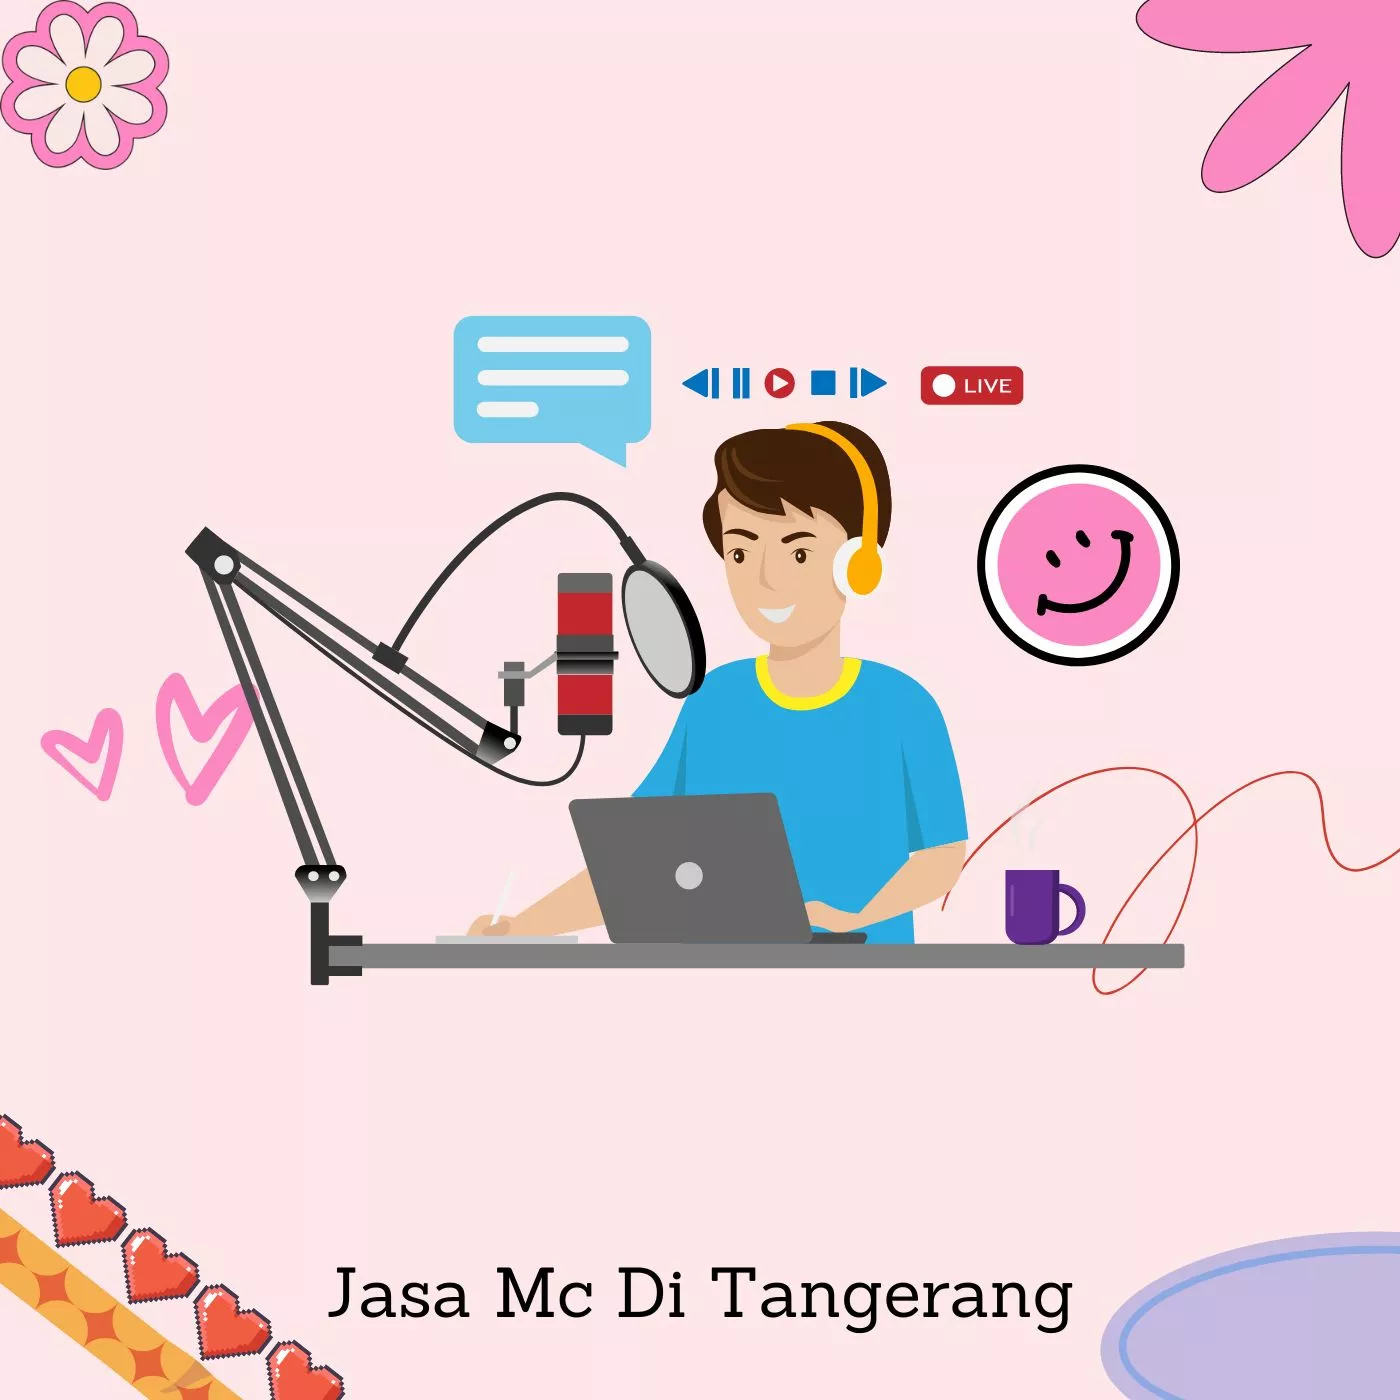 Jasa Mc Di Tangerang 